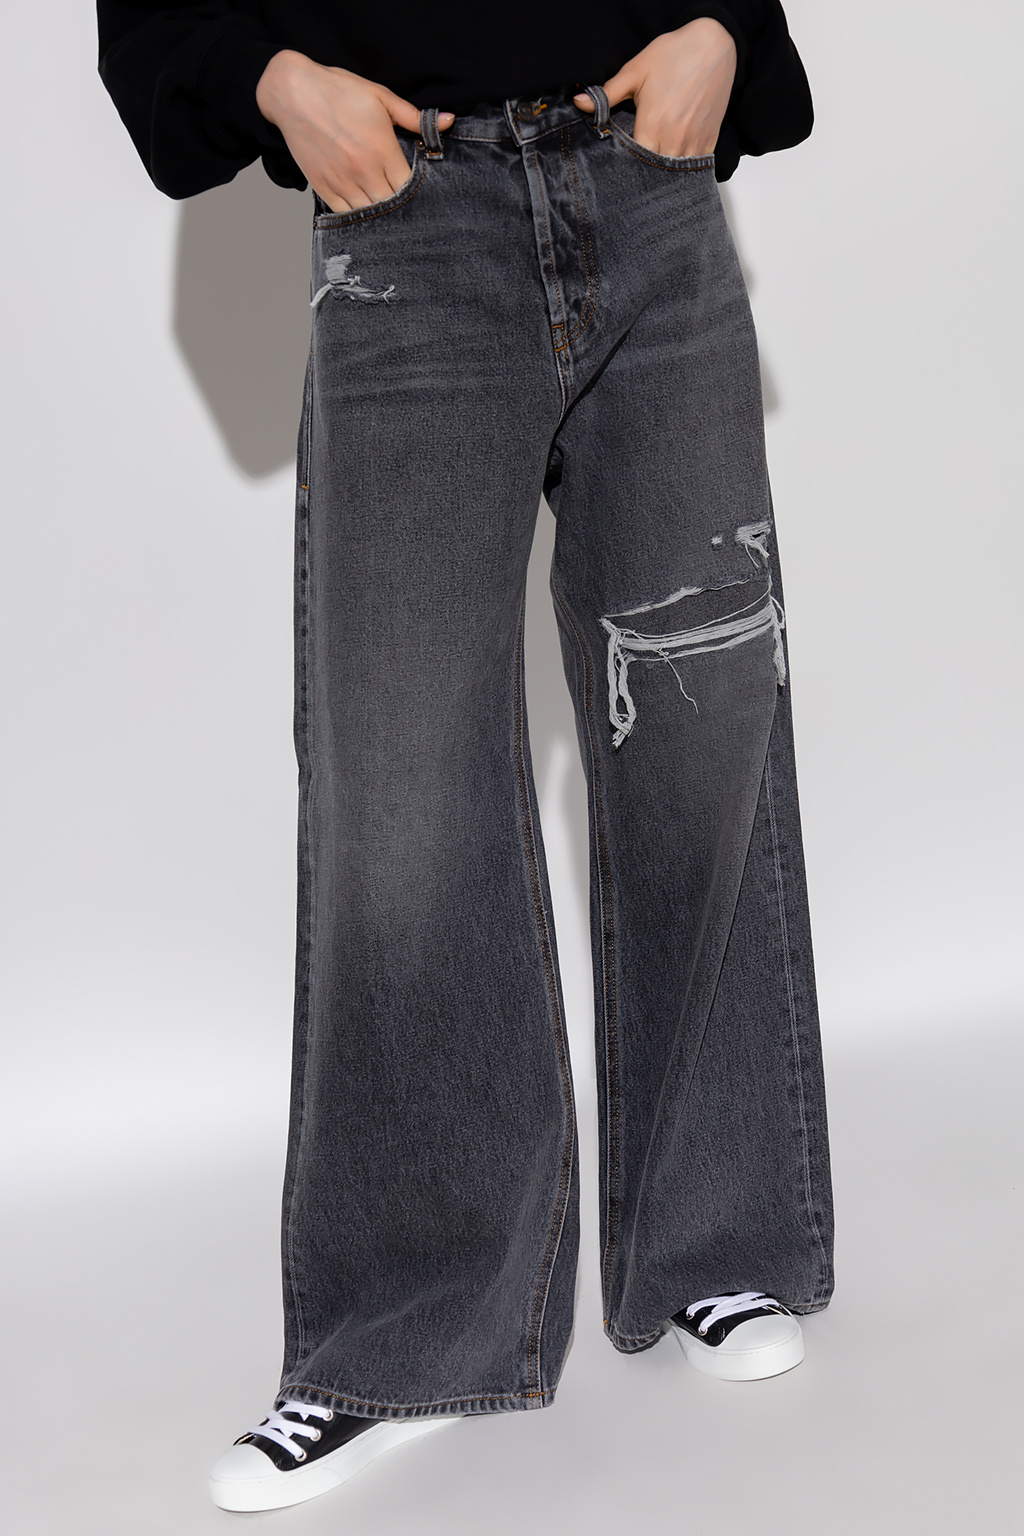 ‘D-SIRE’ jeans Diesel - Vitkac Australia